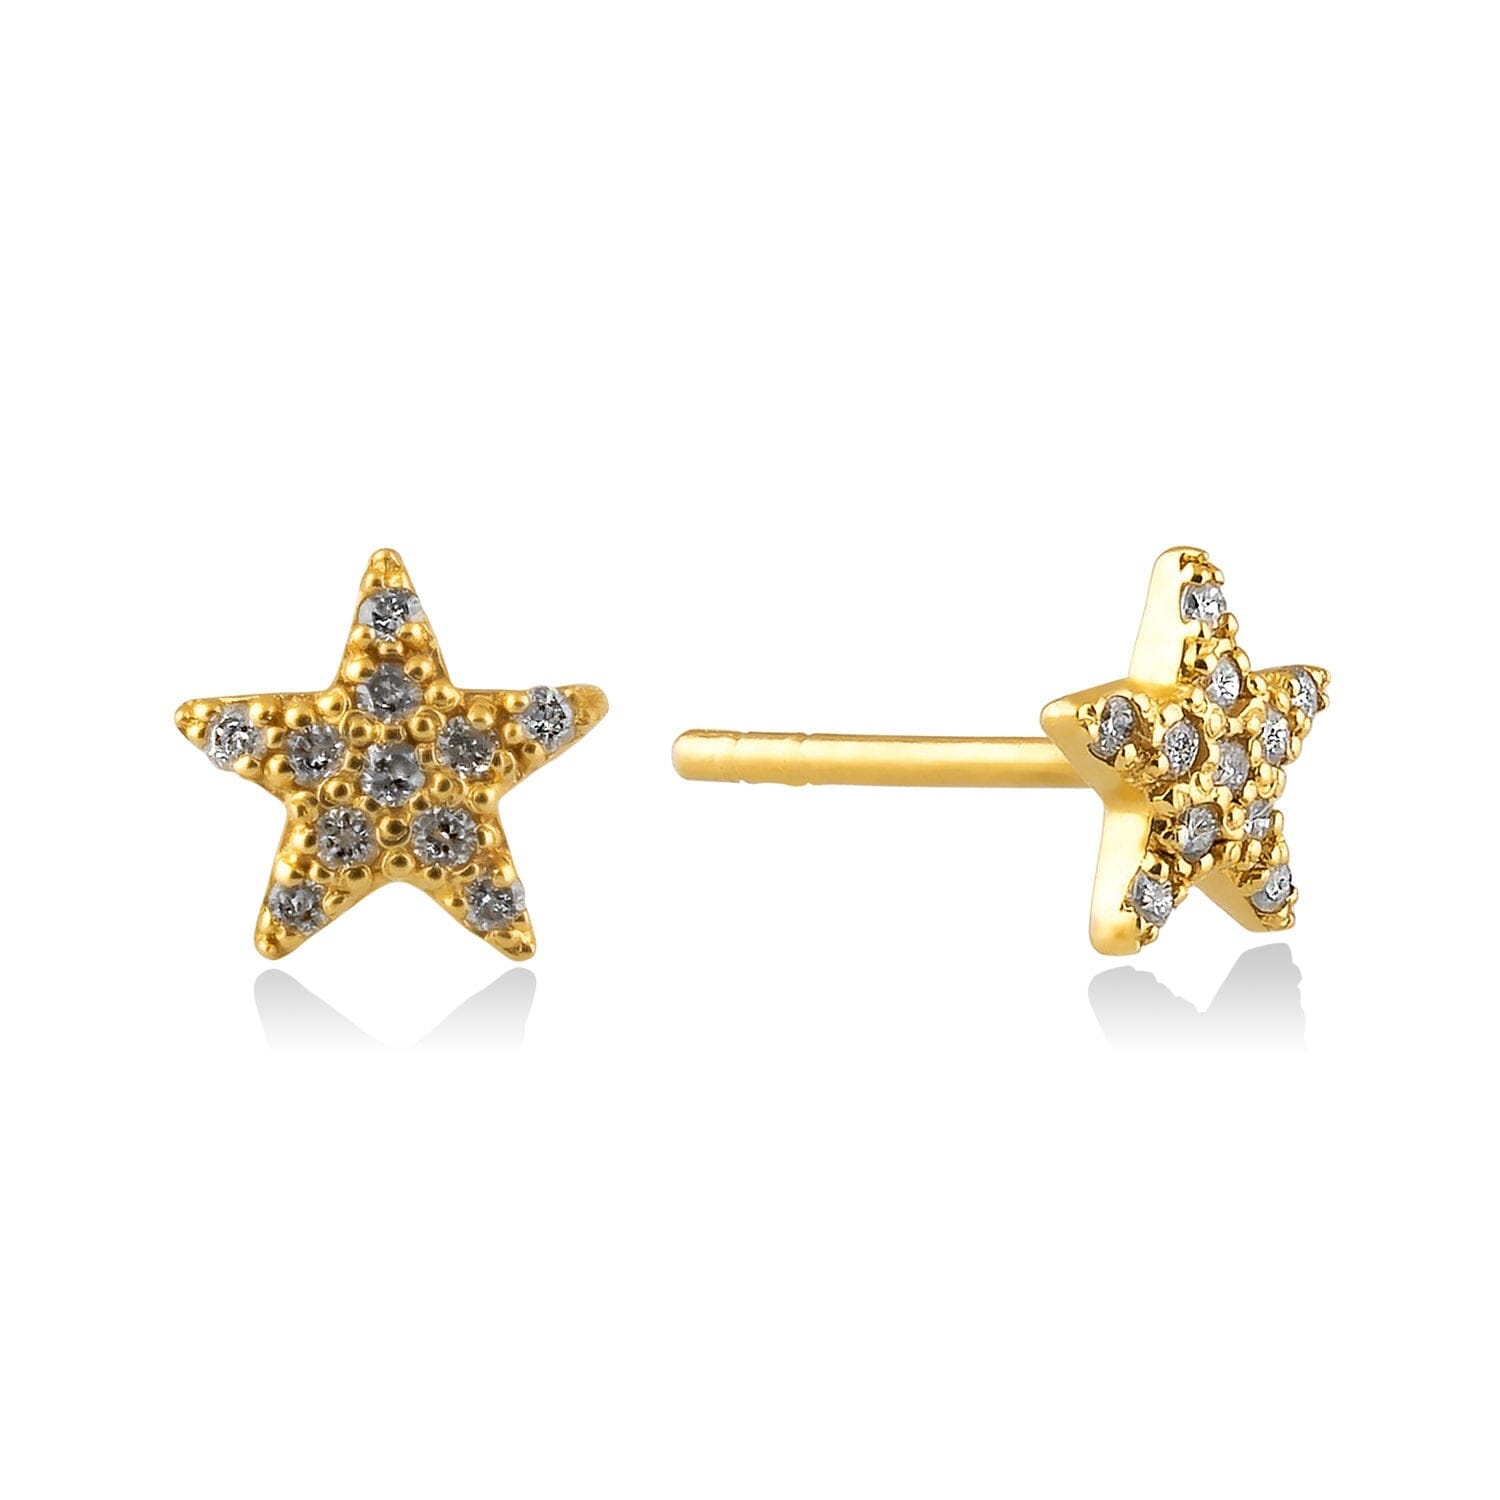 14K Solid Gold Navy Blue Stone Star Earrings